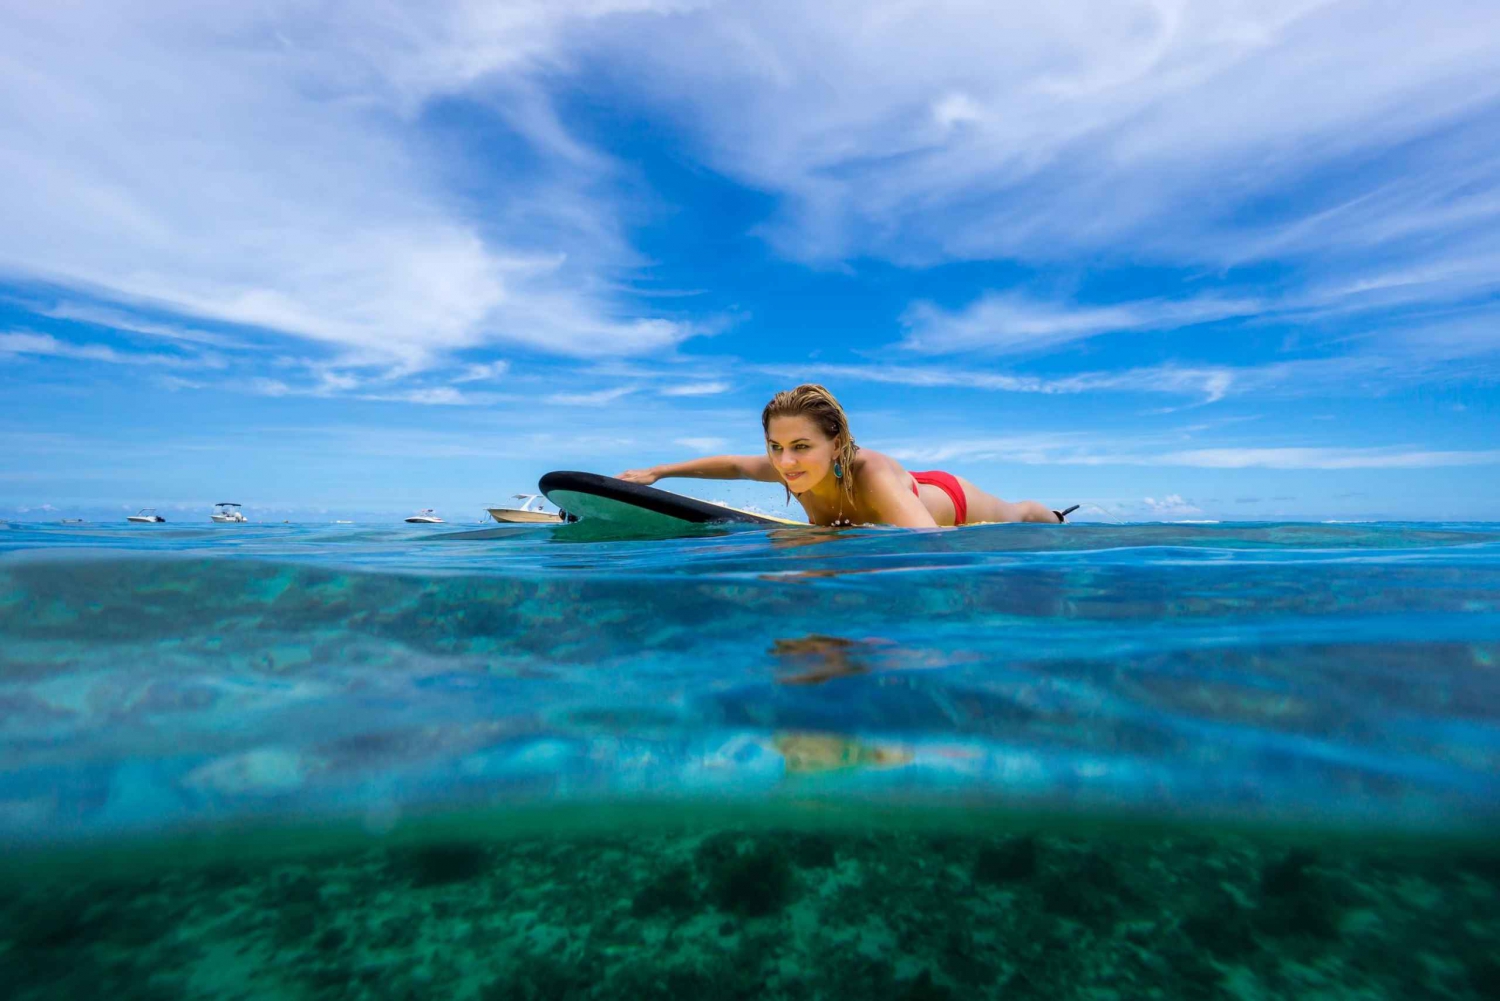 South Maui: Kalama Beach Park Surf Lessons